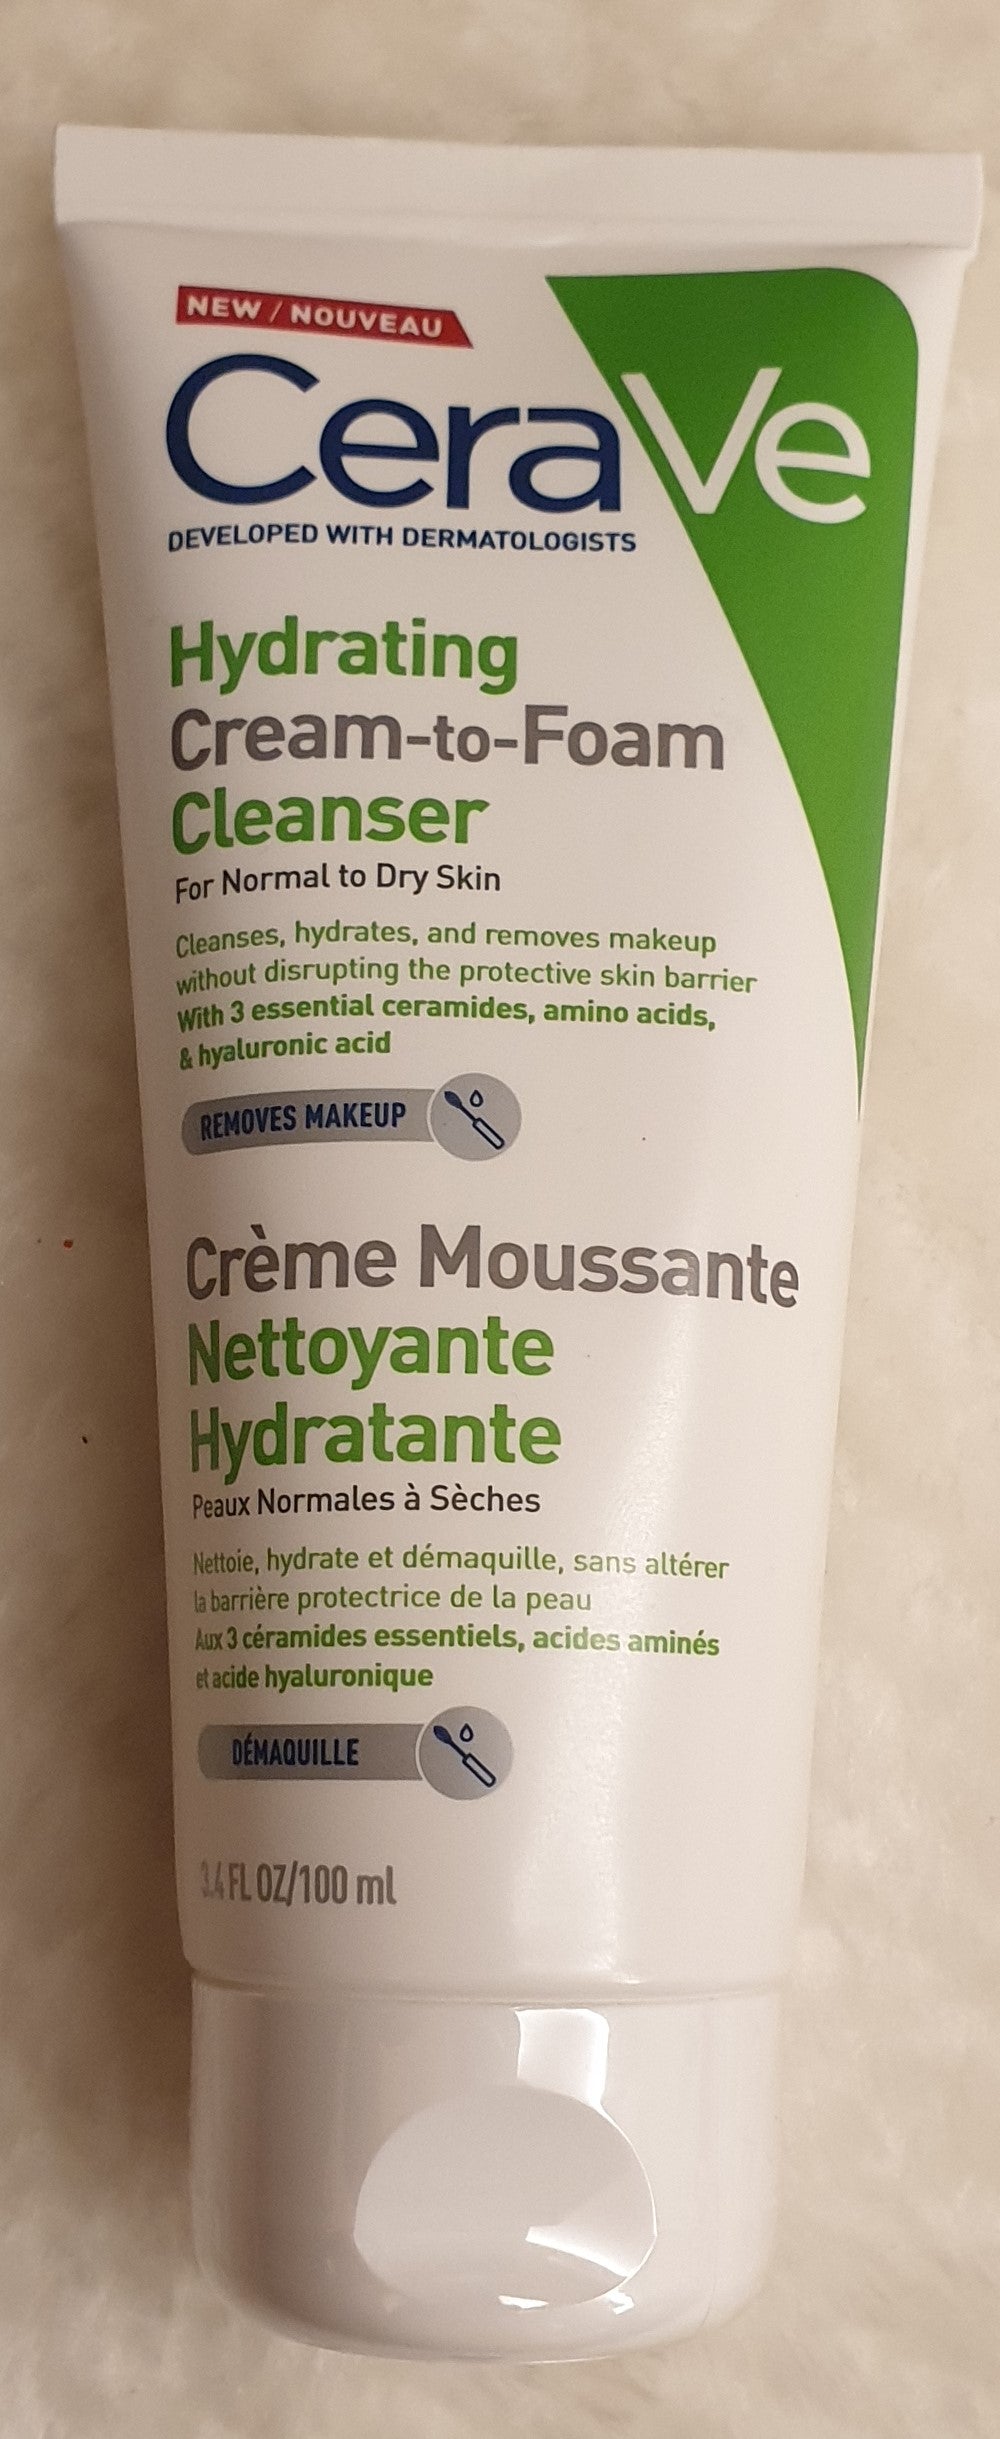 Hydrating Cream-to-Foam Cleanser